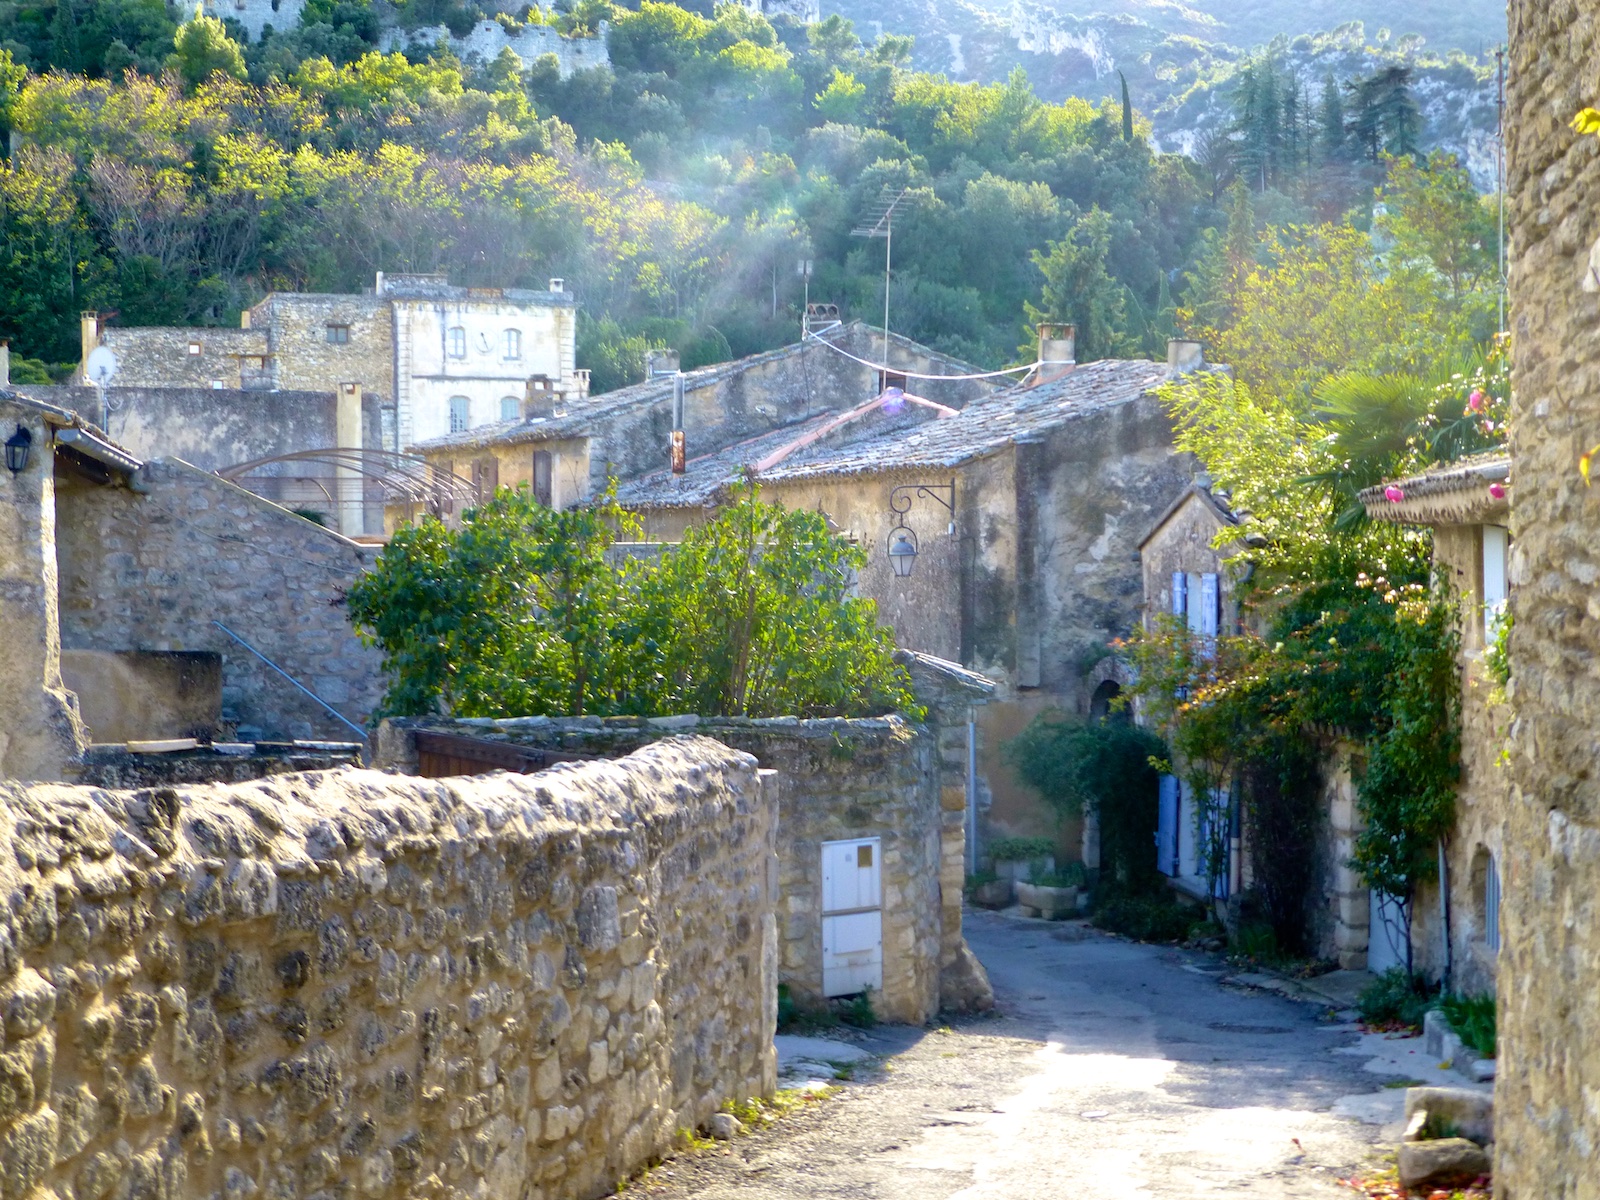 Oppède-le-Vieux, Luberon, Vaucluse, Provence, France